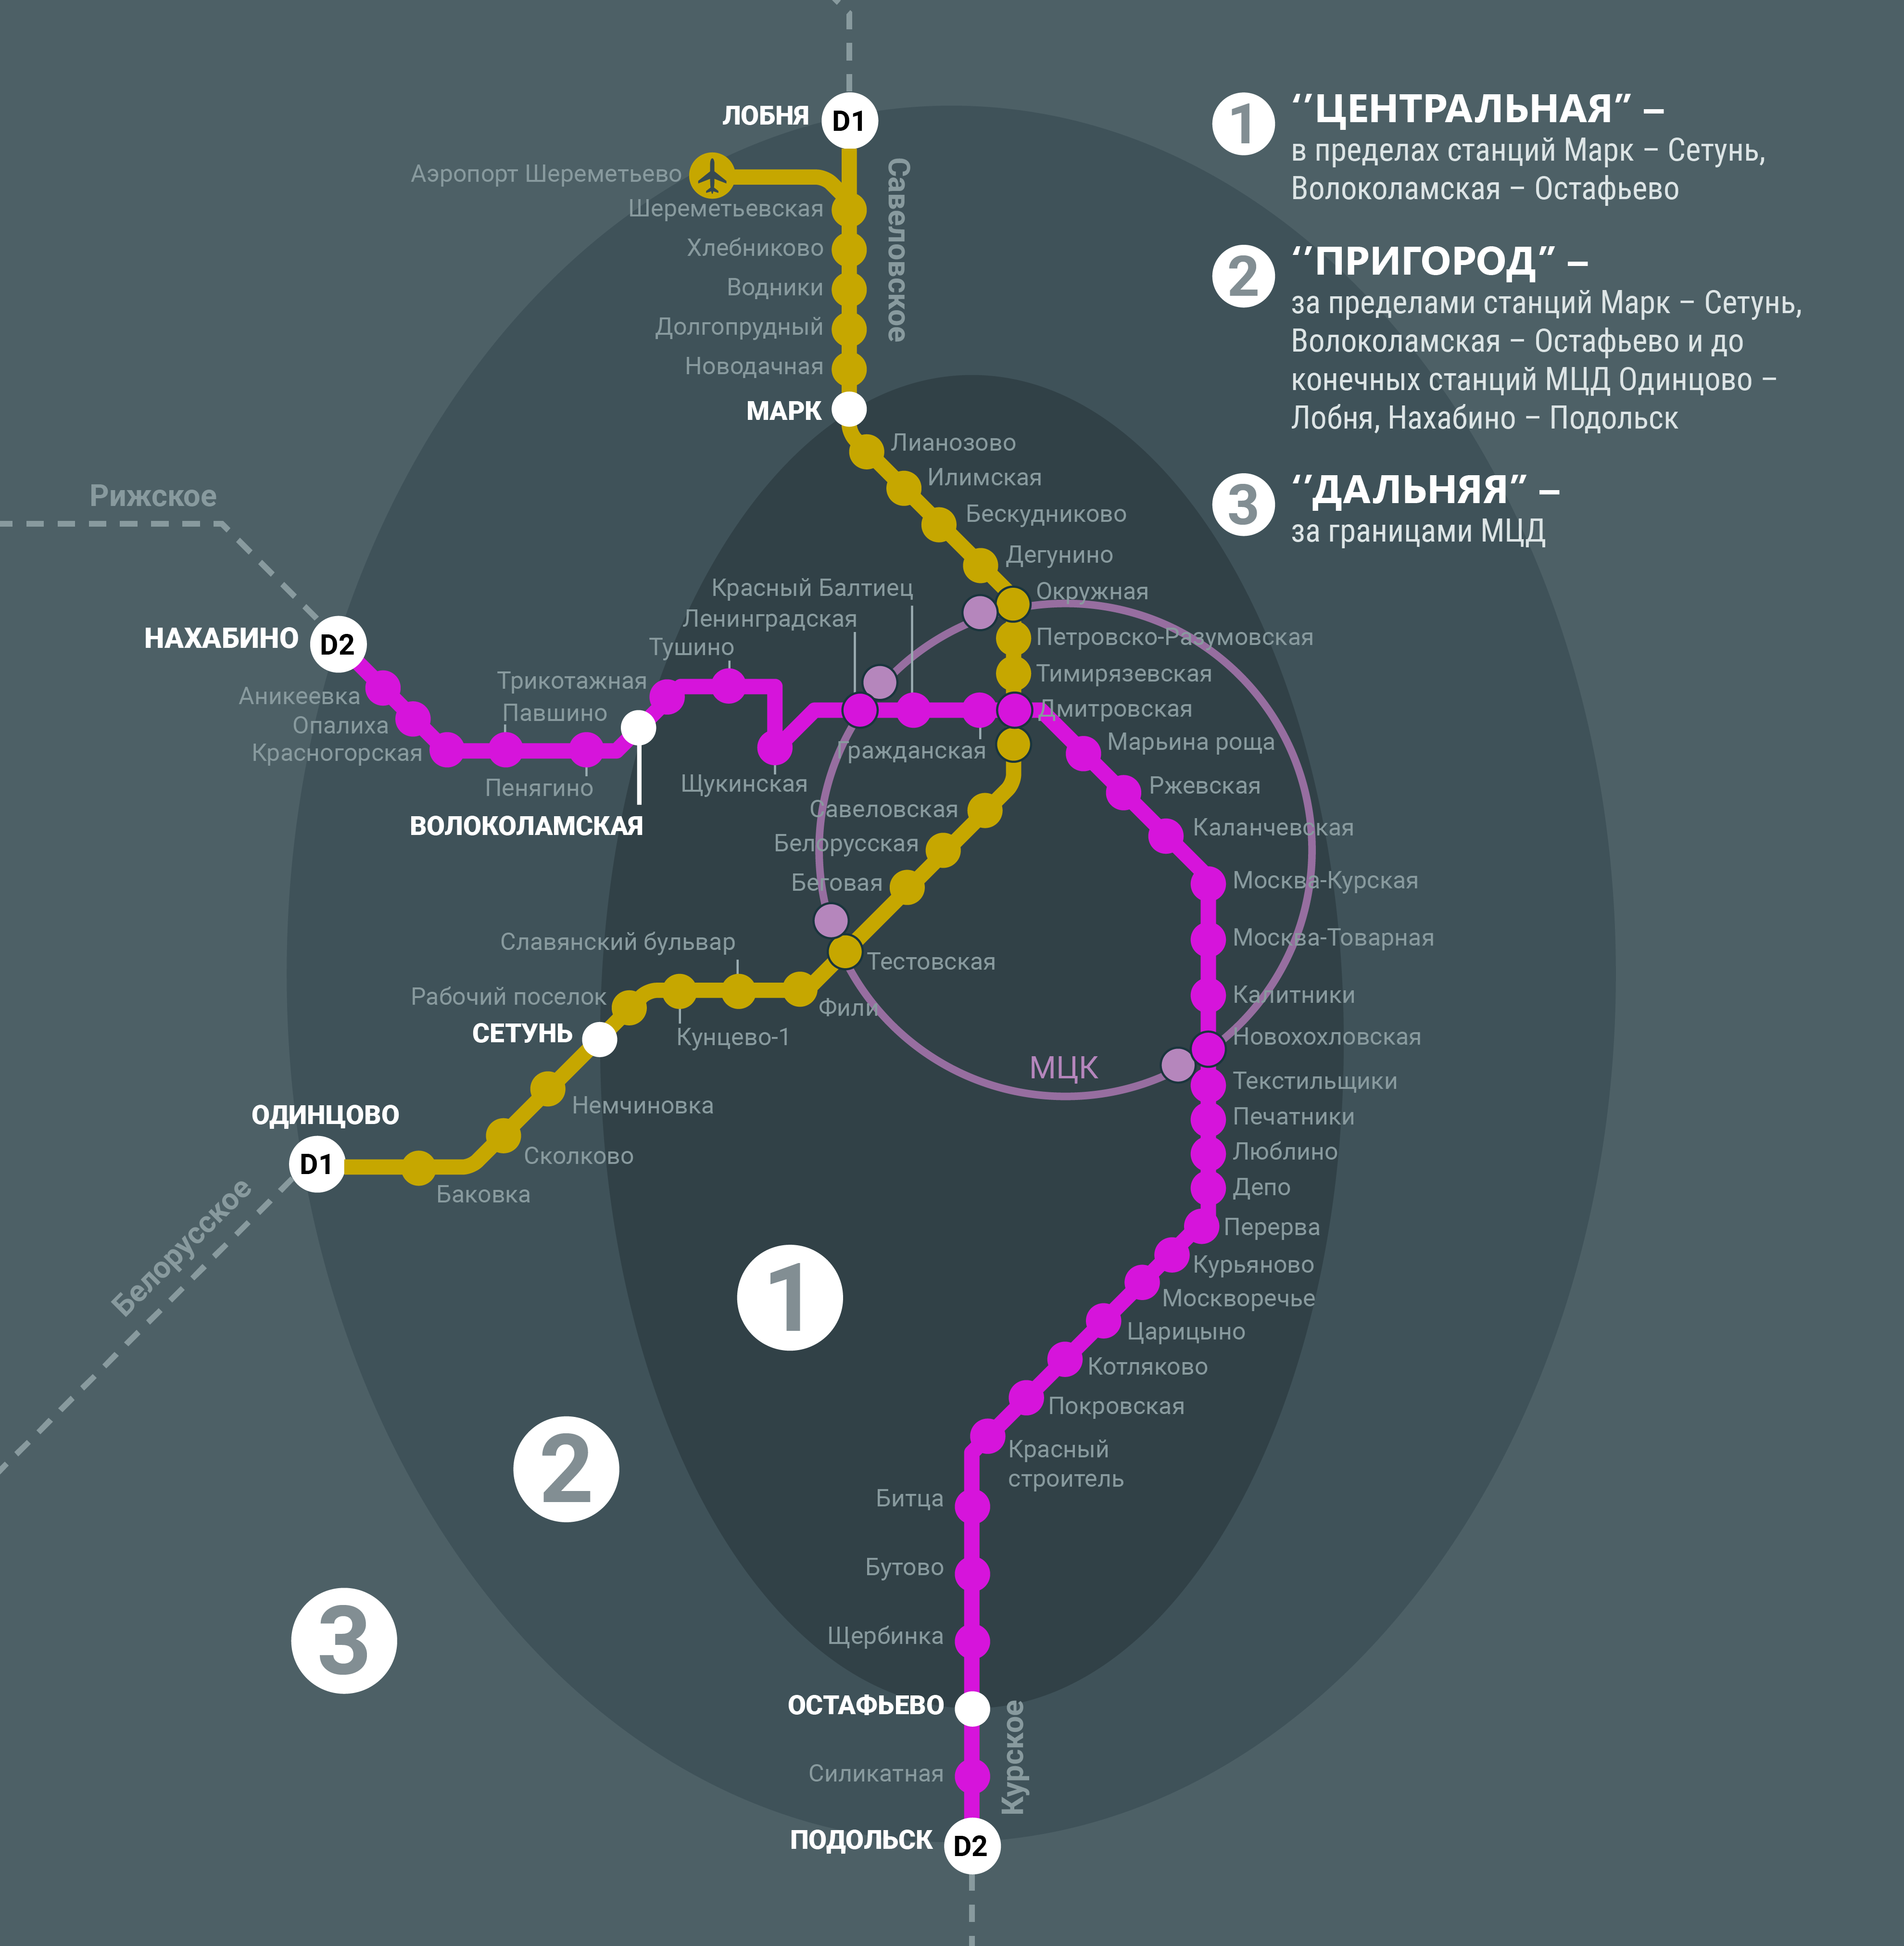 Мцд 1 схема станций на карте москвы и метро вместе